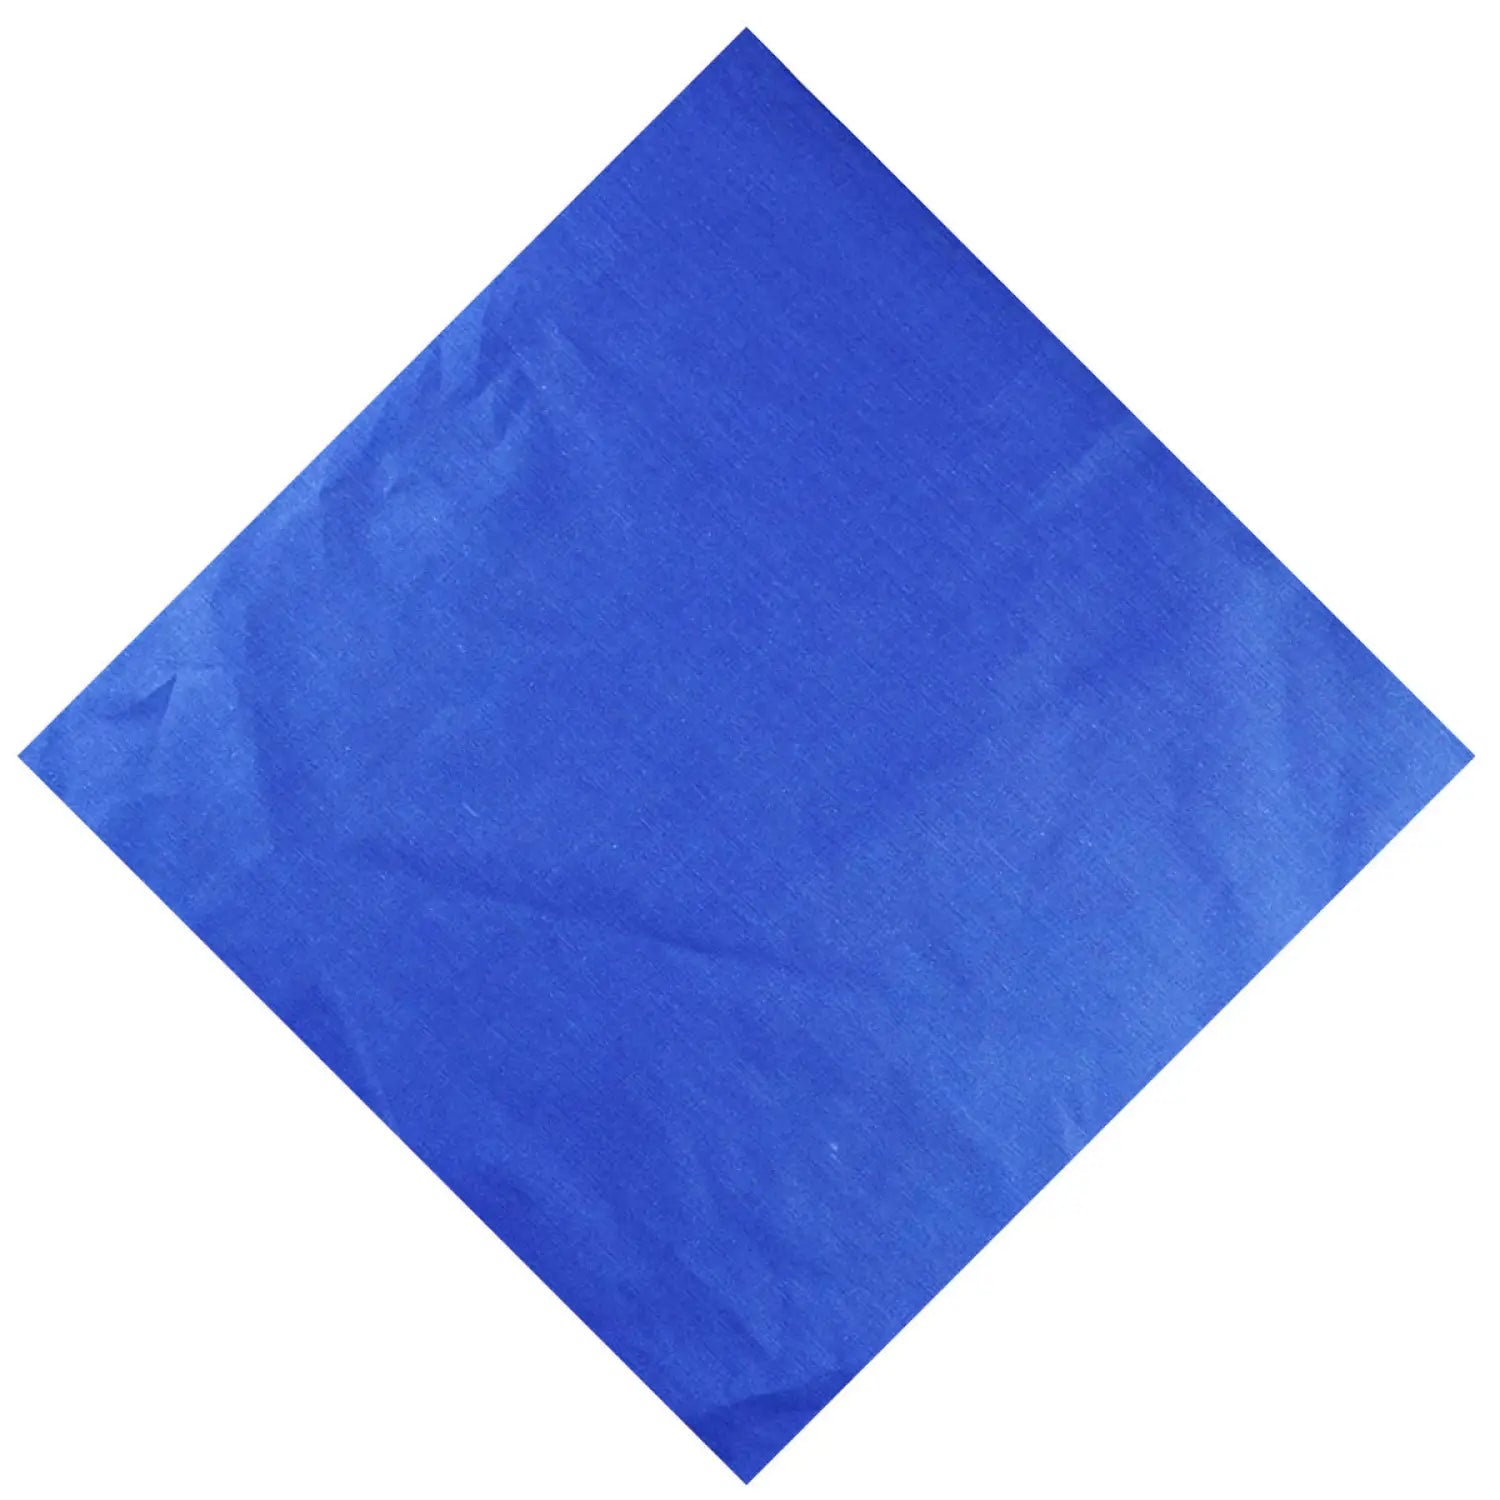 Royal blue cotton lunch napkins displayed on Plain Solid Bandana 100% Cotton Square Bandana